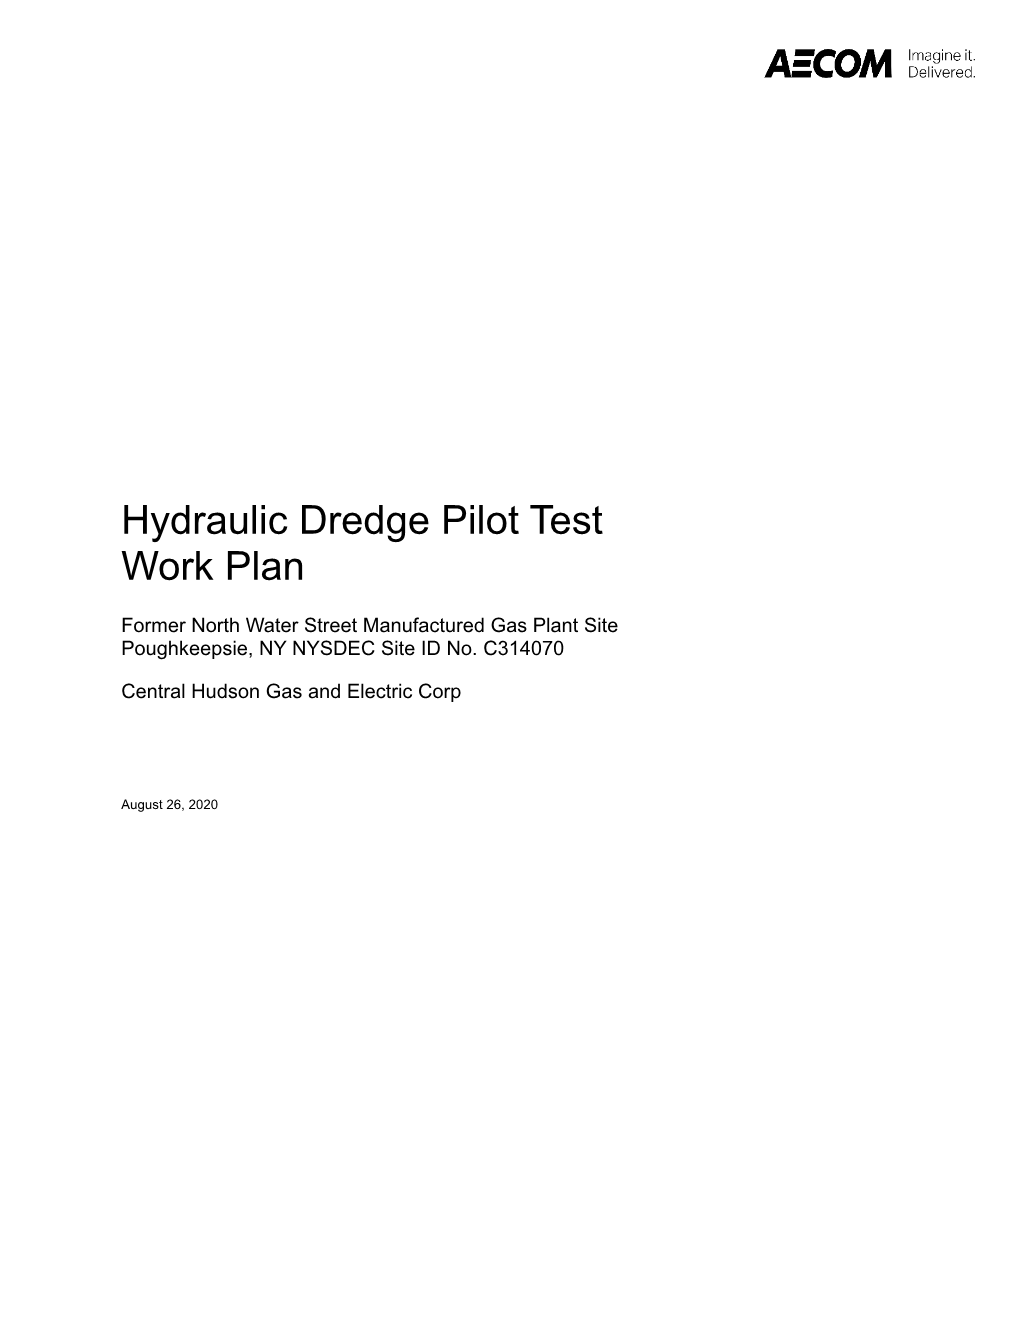 HD Pilot Test Work Plan